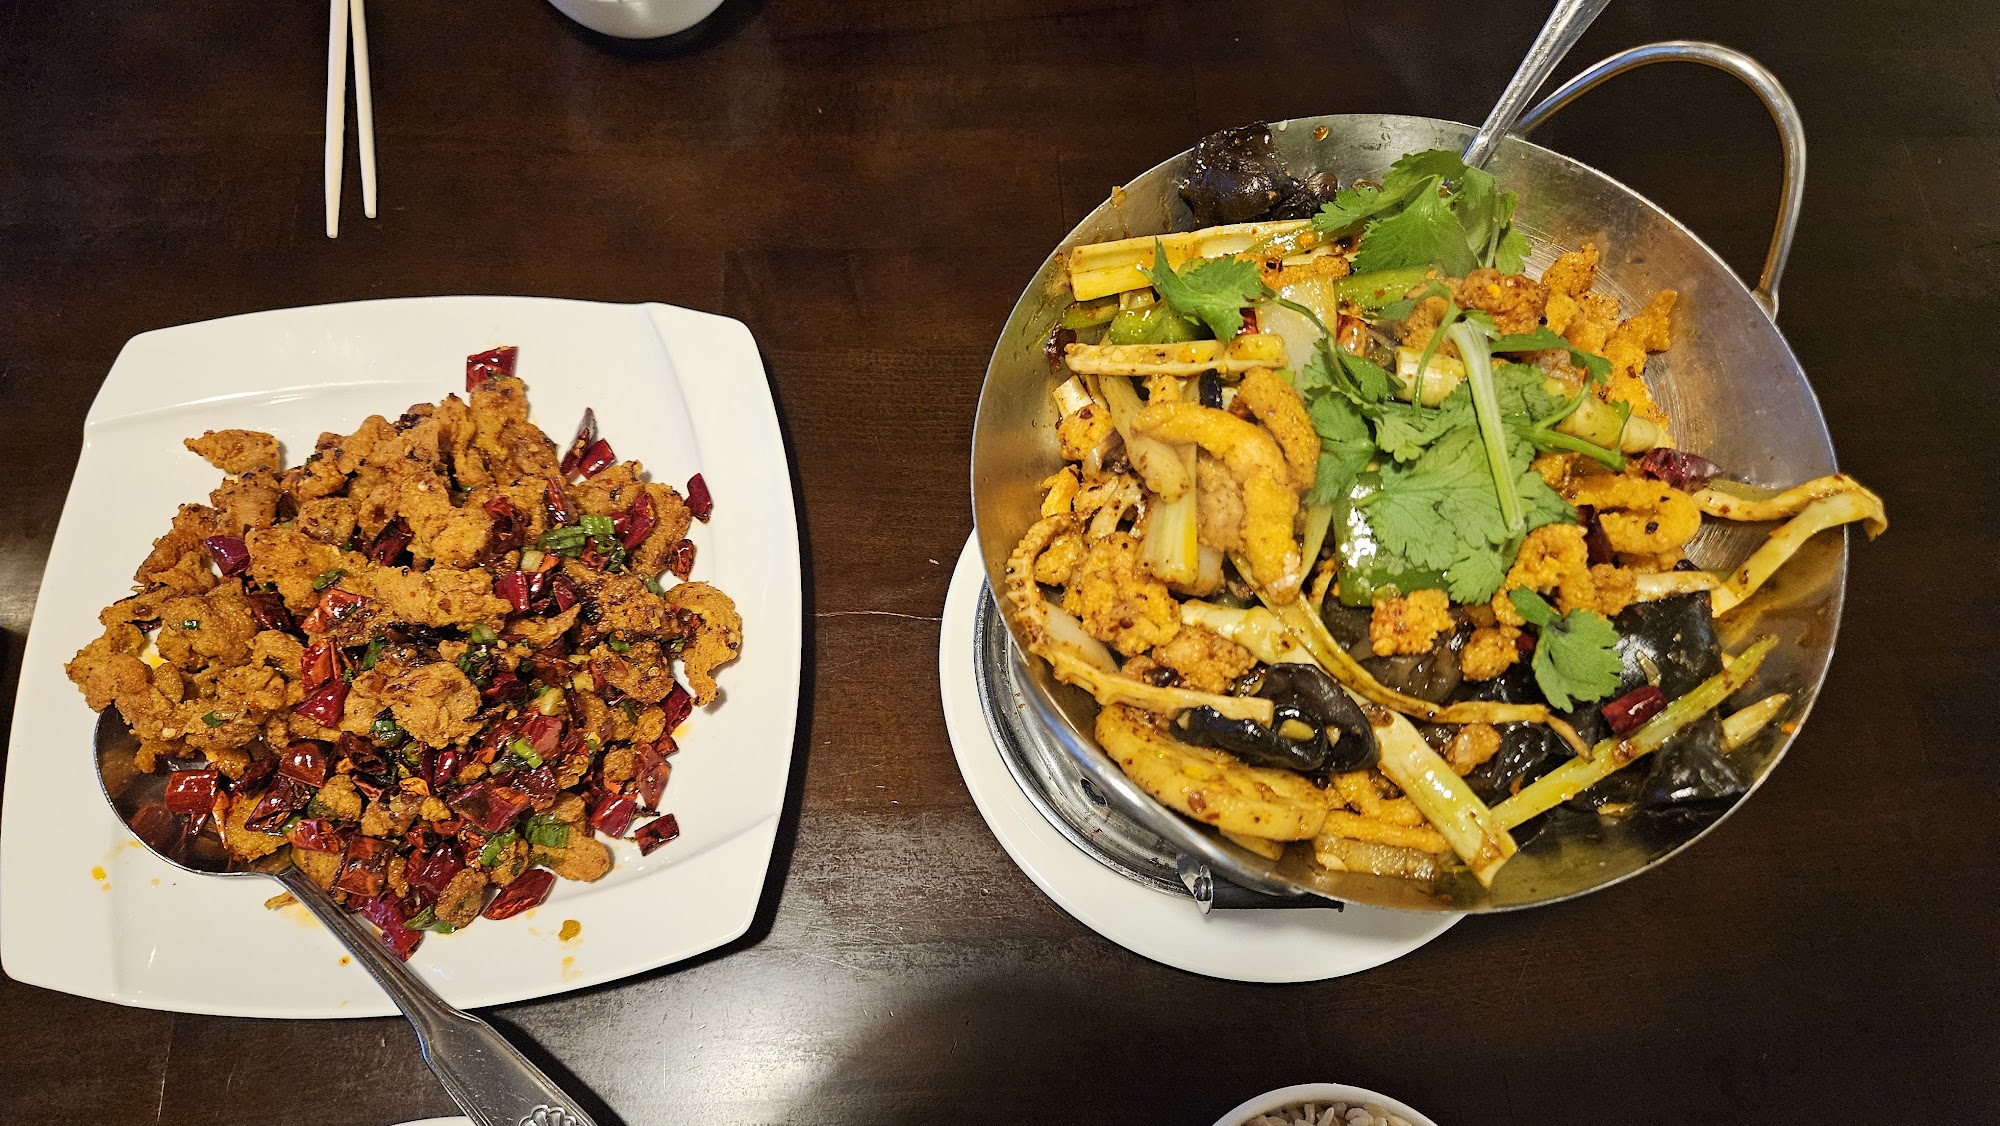 Spicy Home Tasty 2 | Sichuan Cuisine